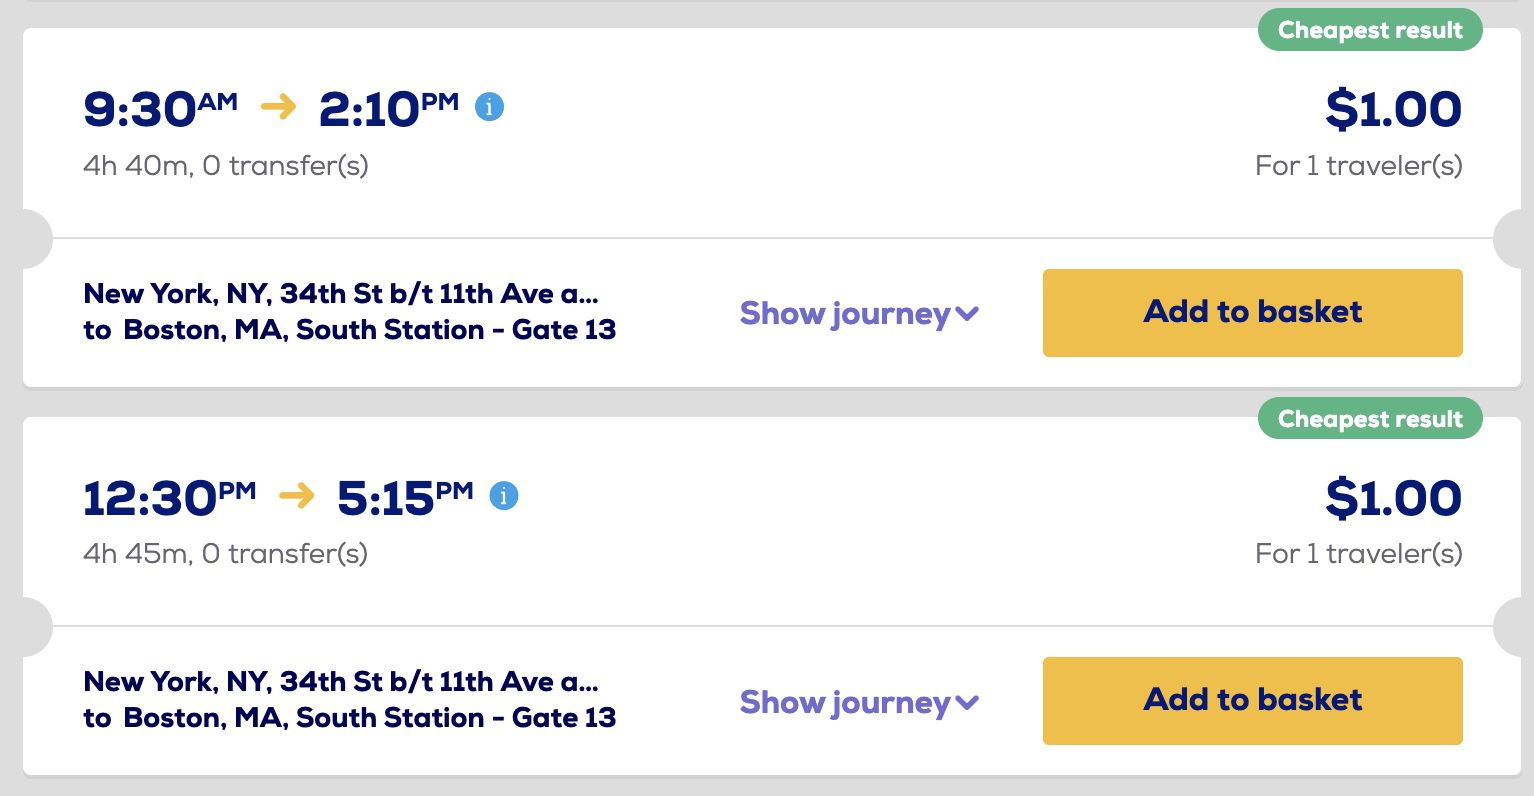 megabus USA: Fernbus Fahrten ab 5$ (Sep. 2022 bis Jan. 2023)   z.B. New York nach Boston